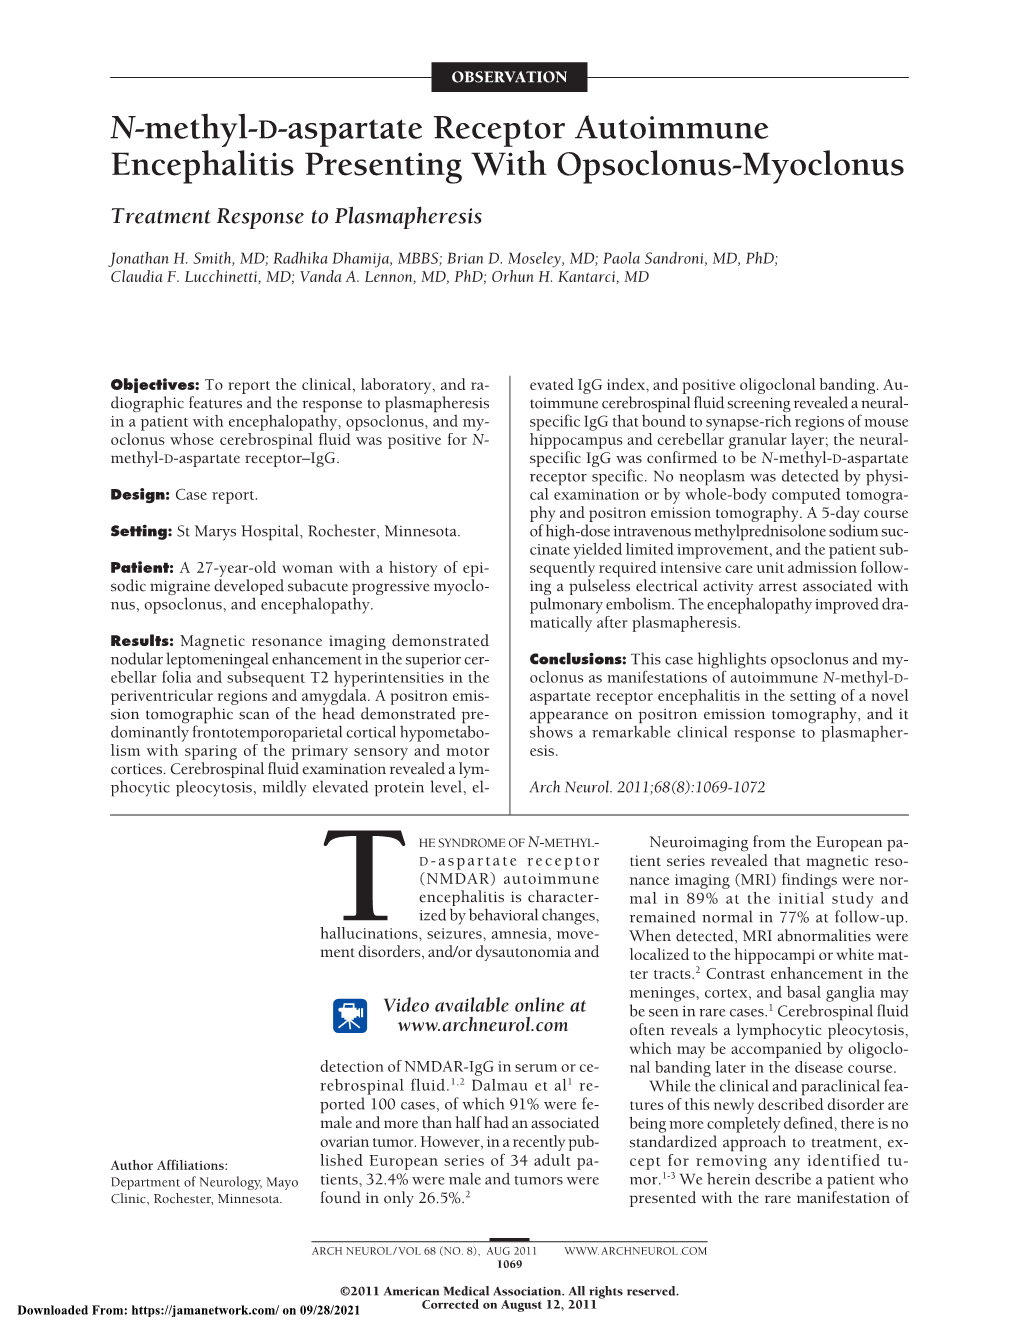 N-Methyl-D-Aspartate Receptor Autoimmune Encephalitis Presenting with Opsoclonus-Myoclonus Treatment Response to Plasmapheresis